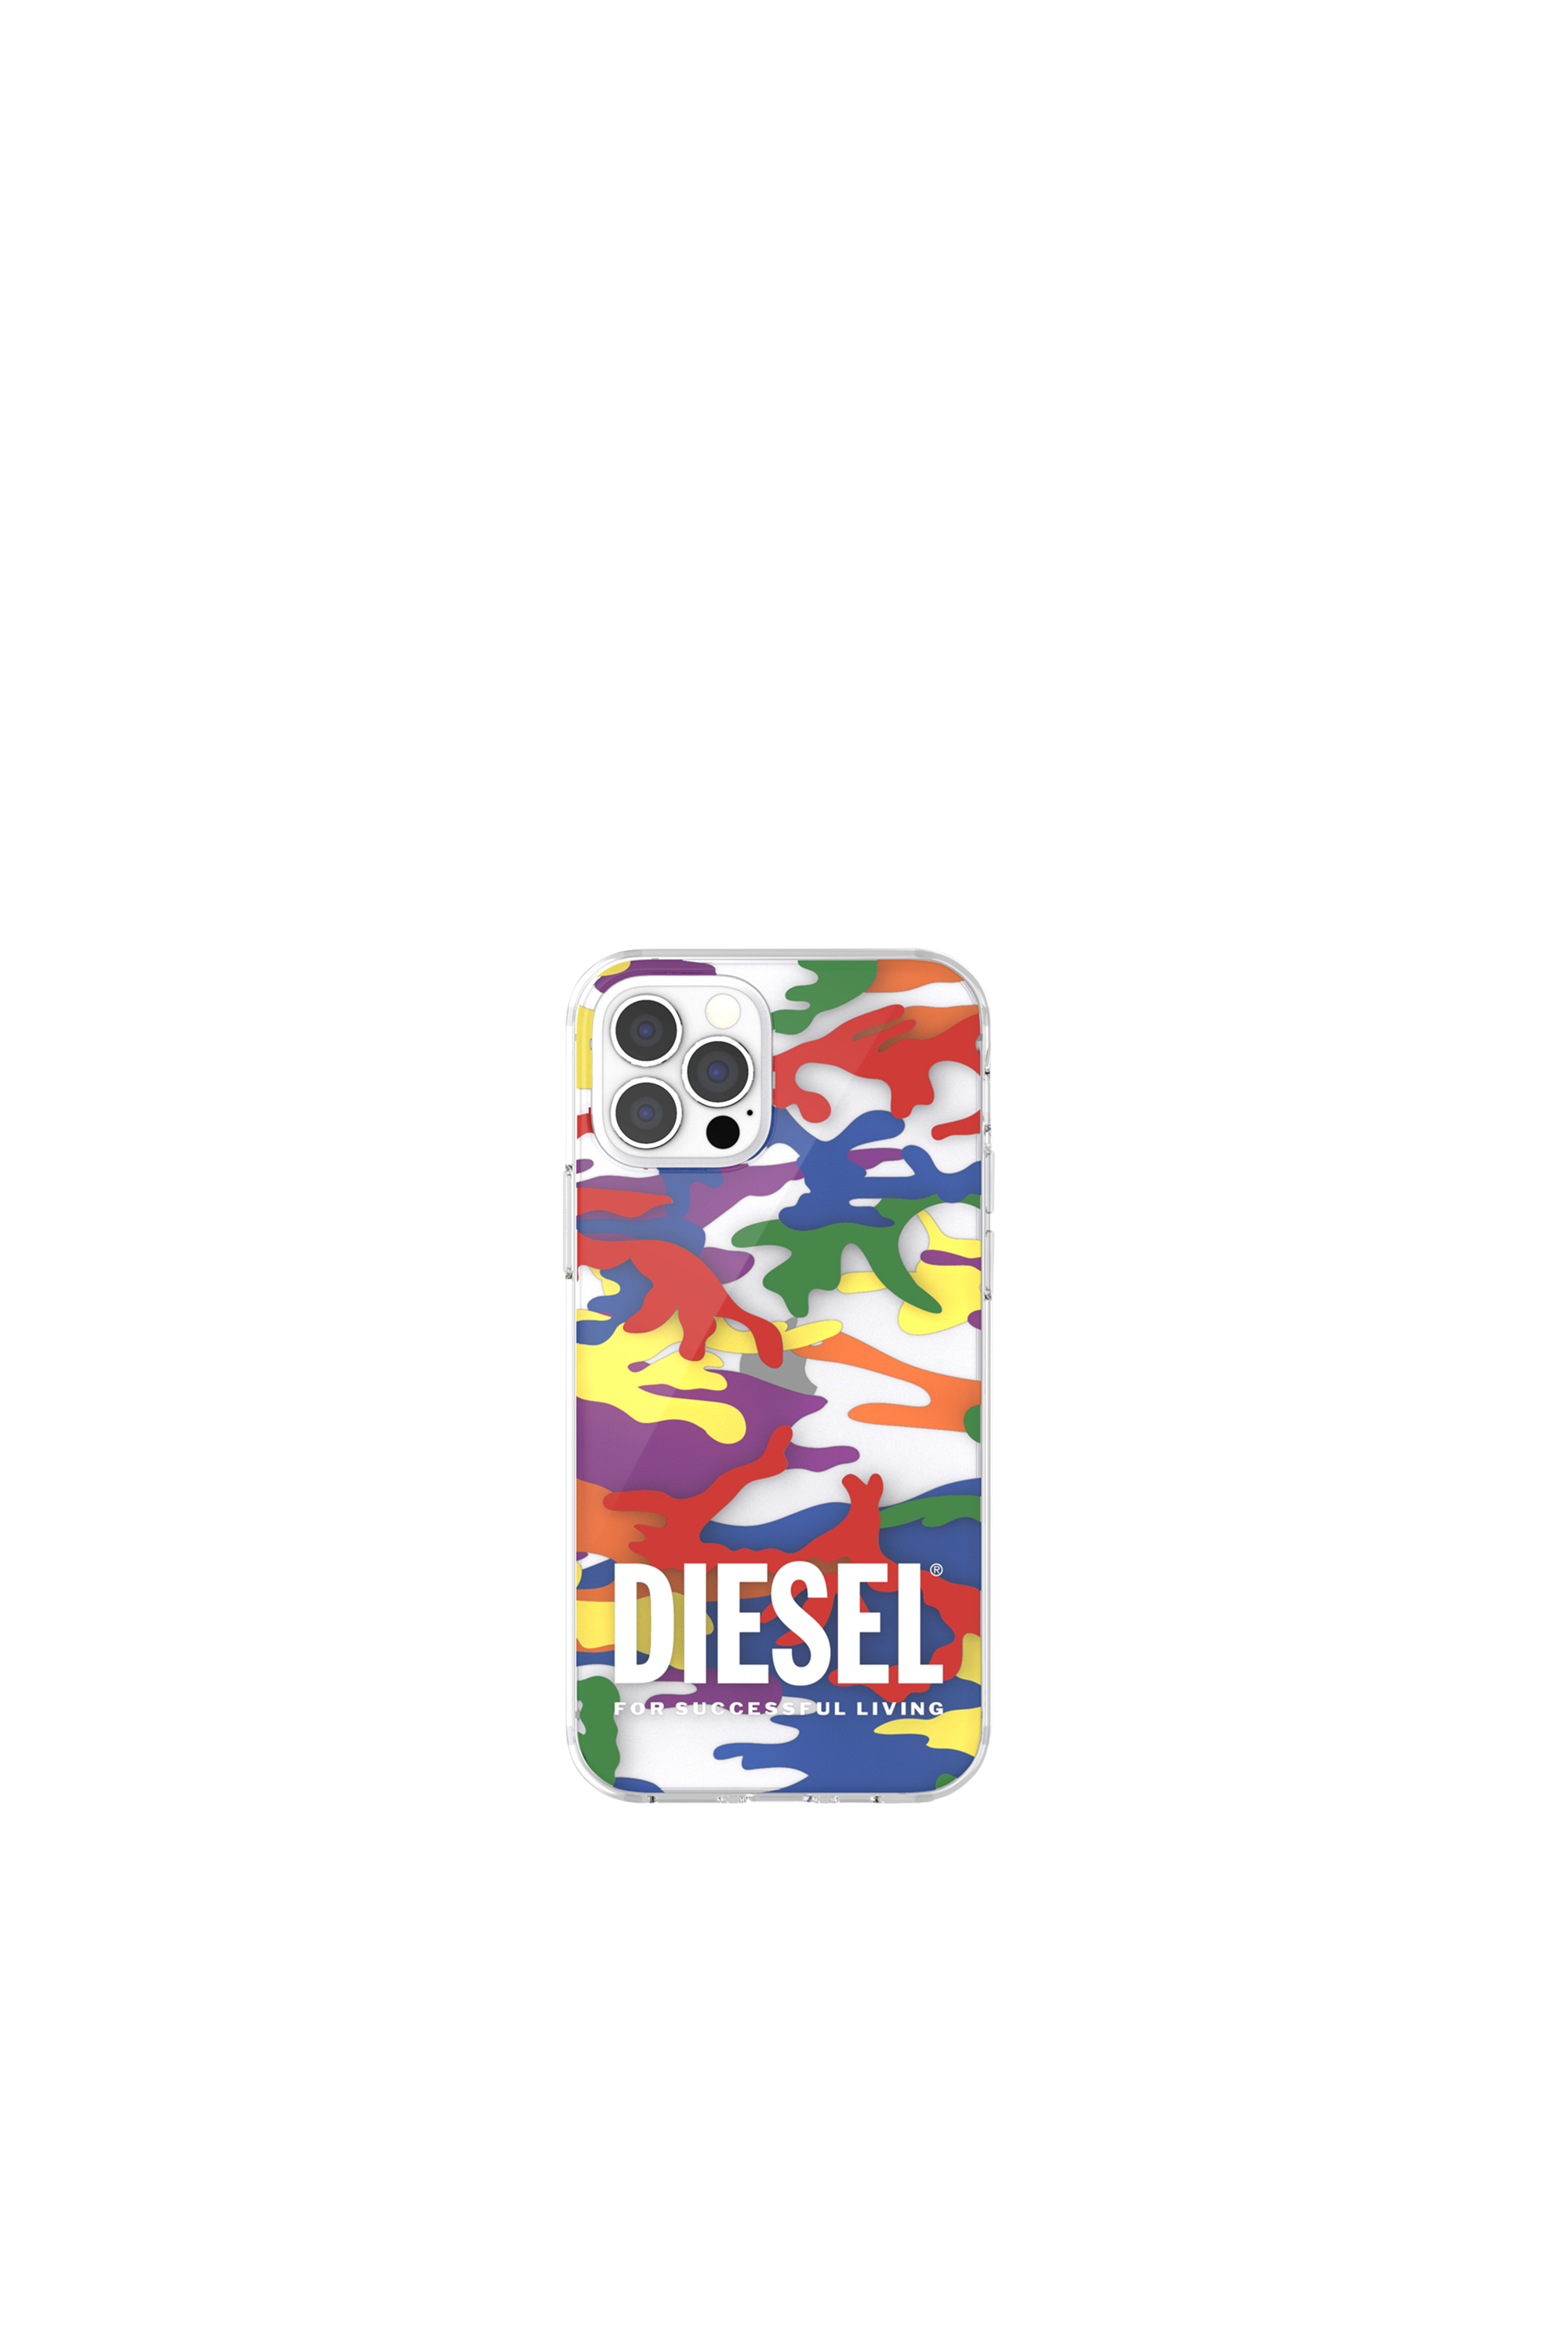 Diesel - 44332  STANDARD CASES, Multicolore - Image 2